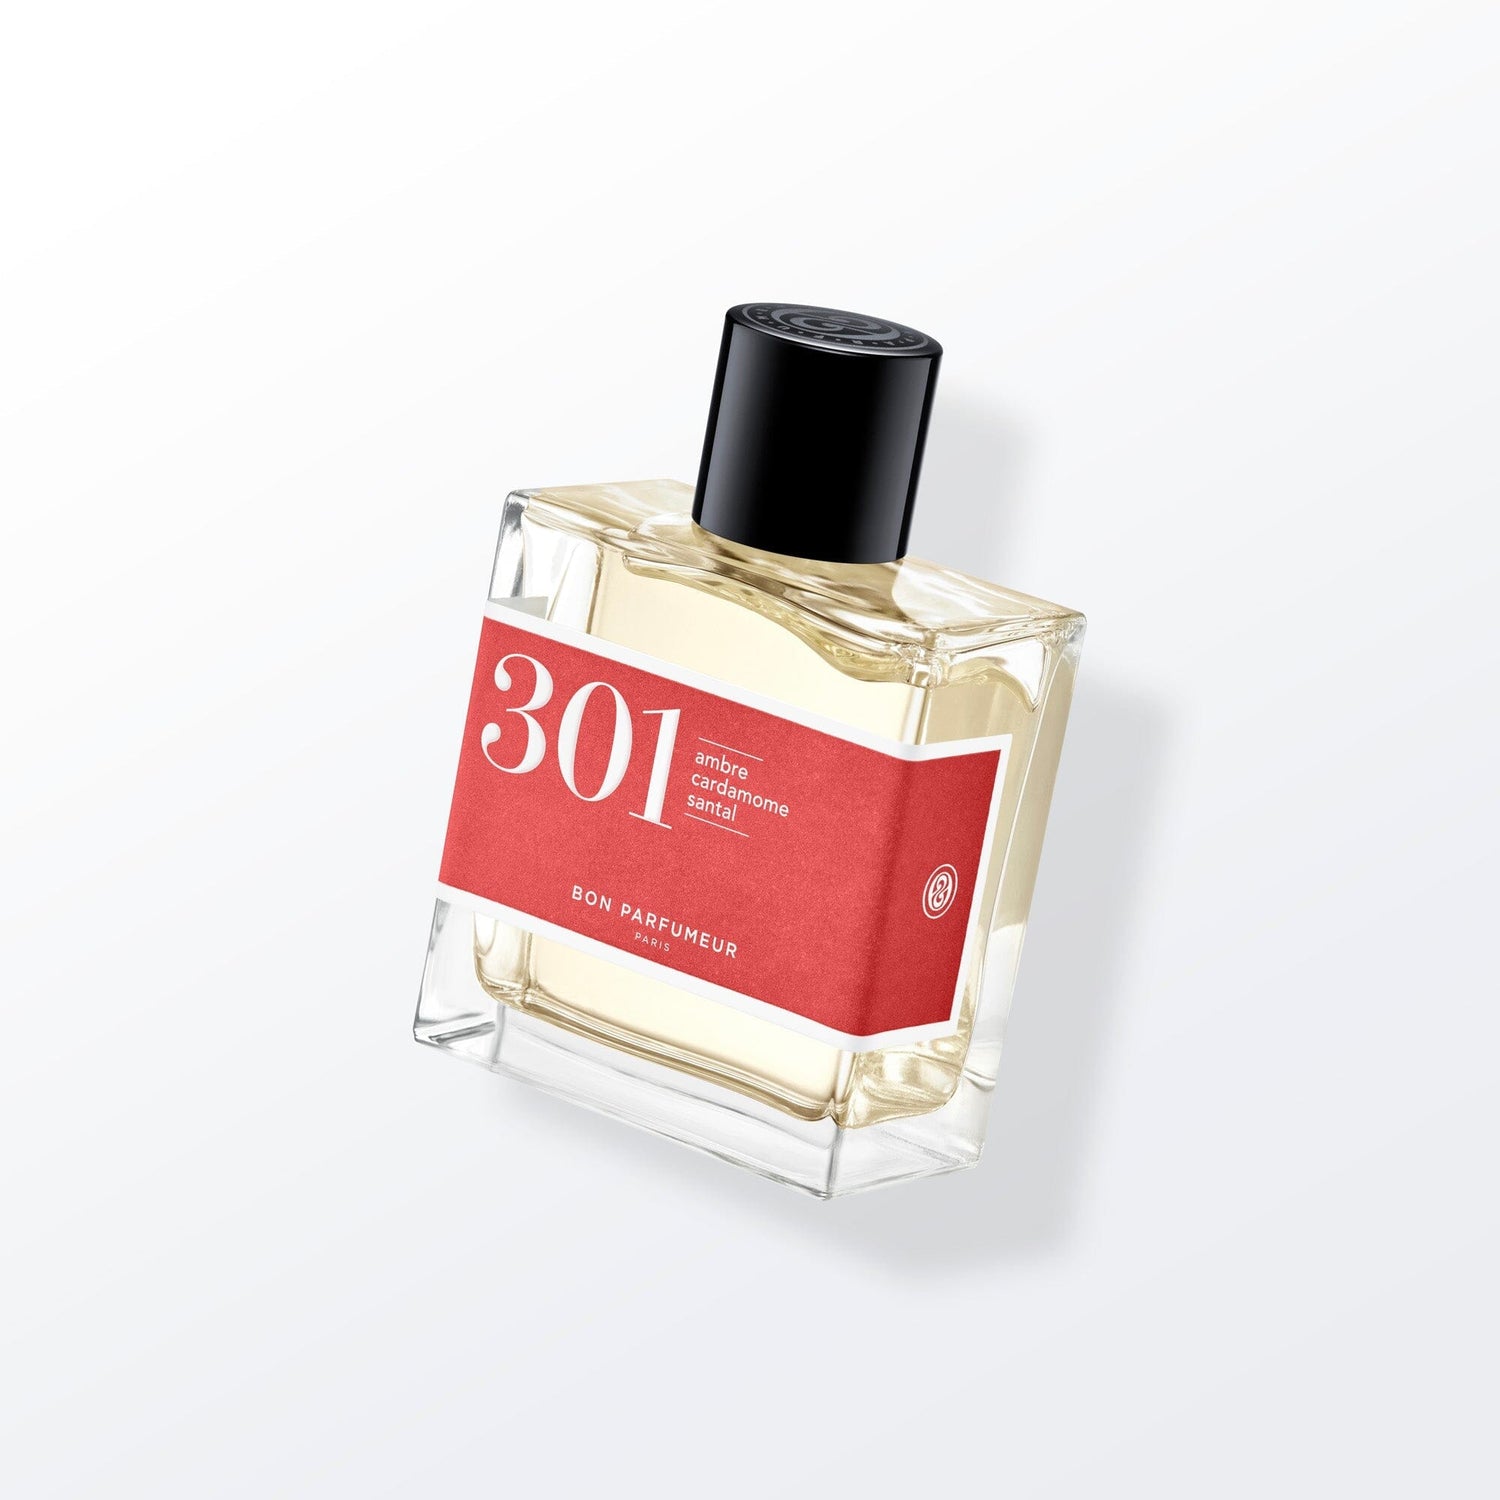 300 - Spicy Amber Fragrances